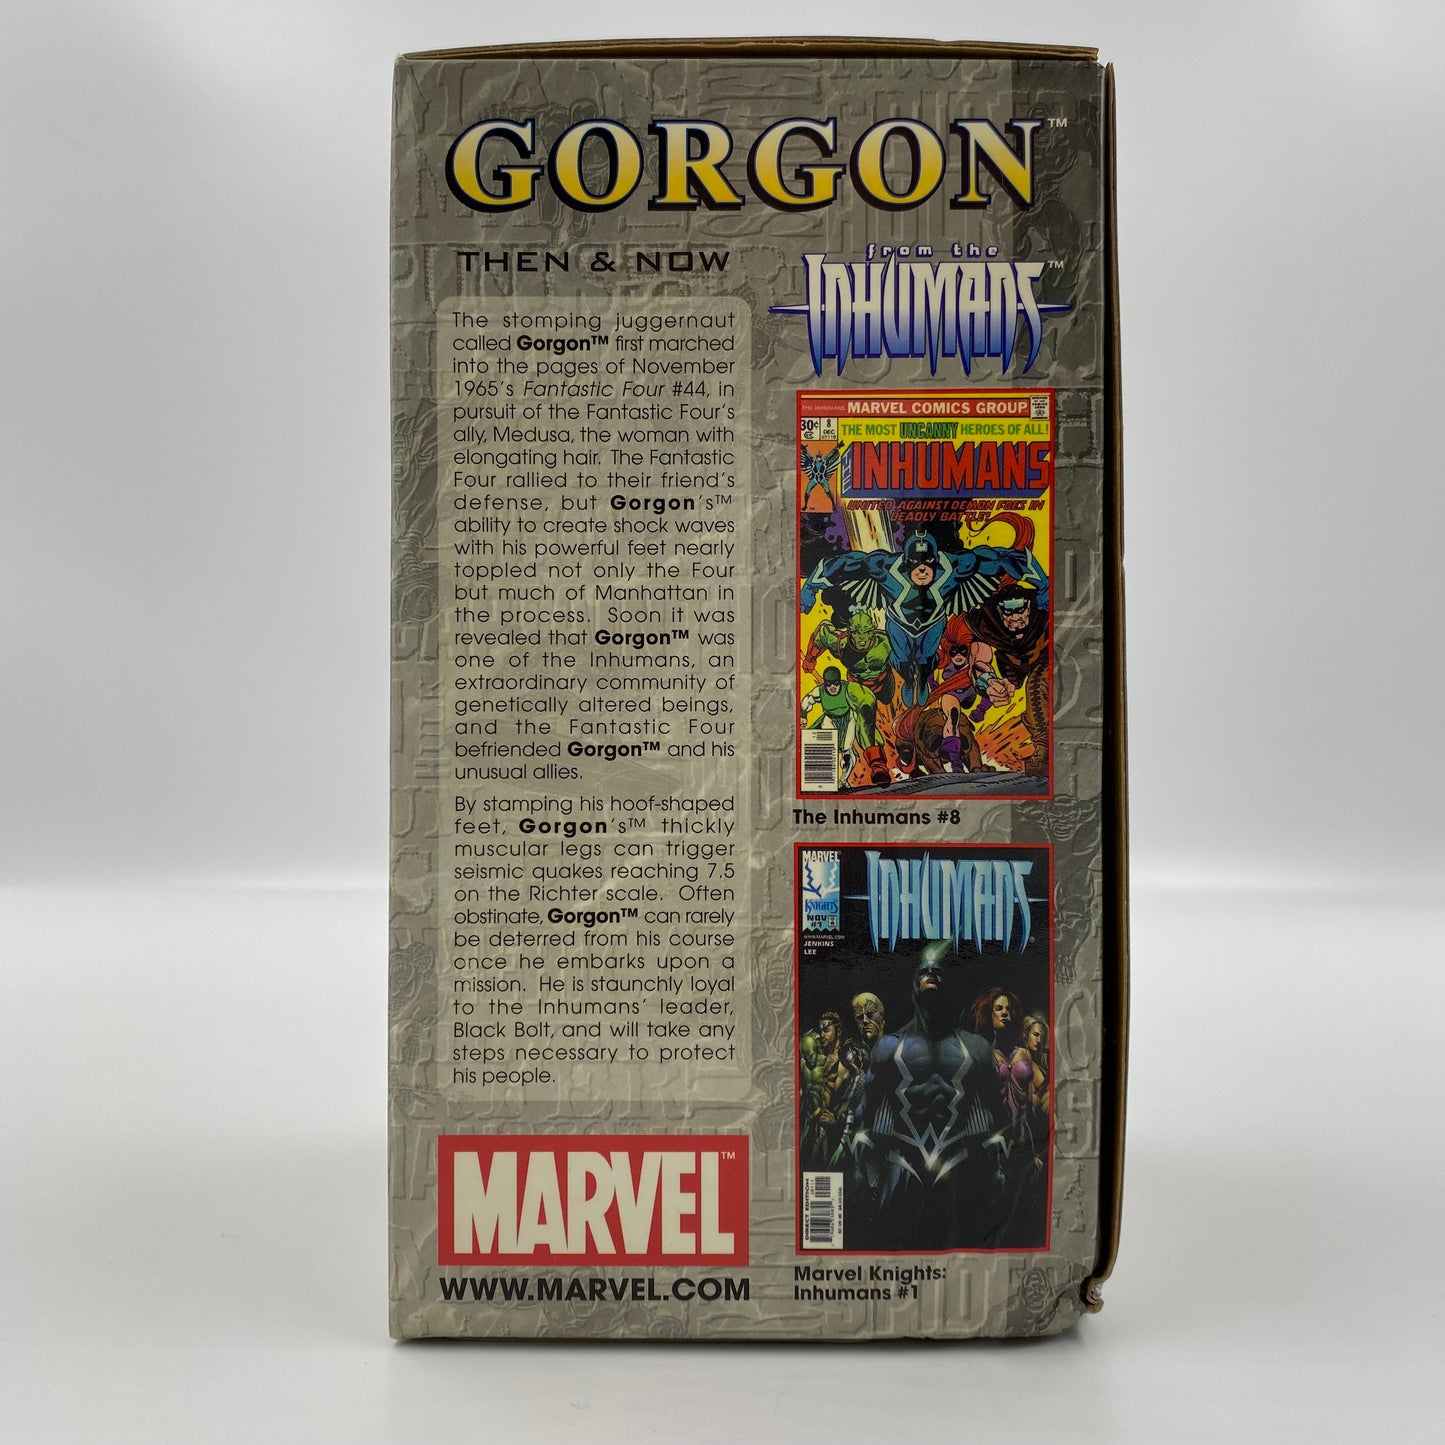 Gorgon Marvel mini-bust (2004) Bowen Designs